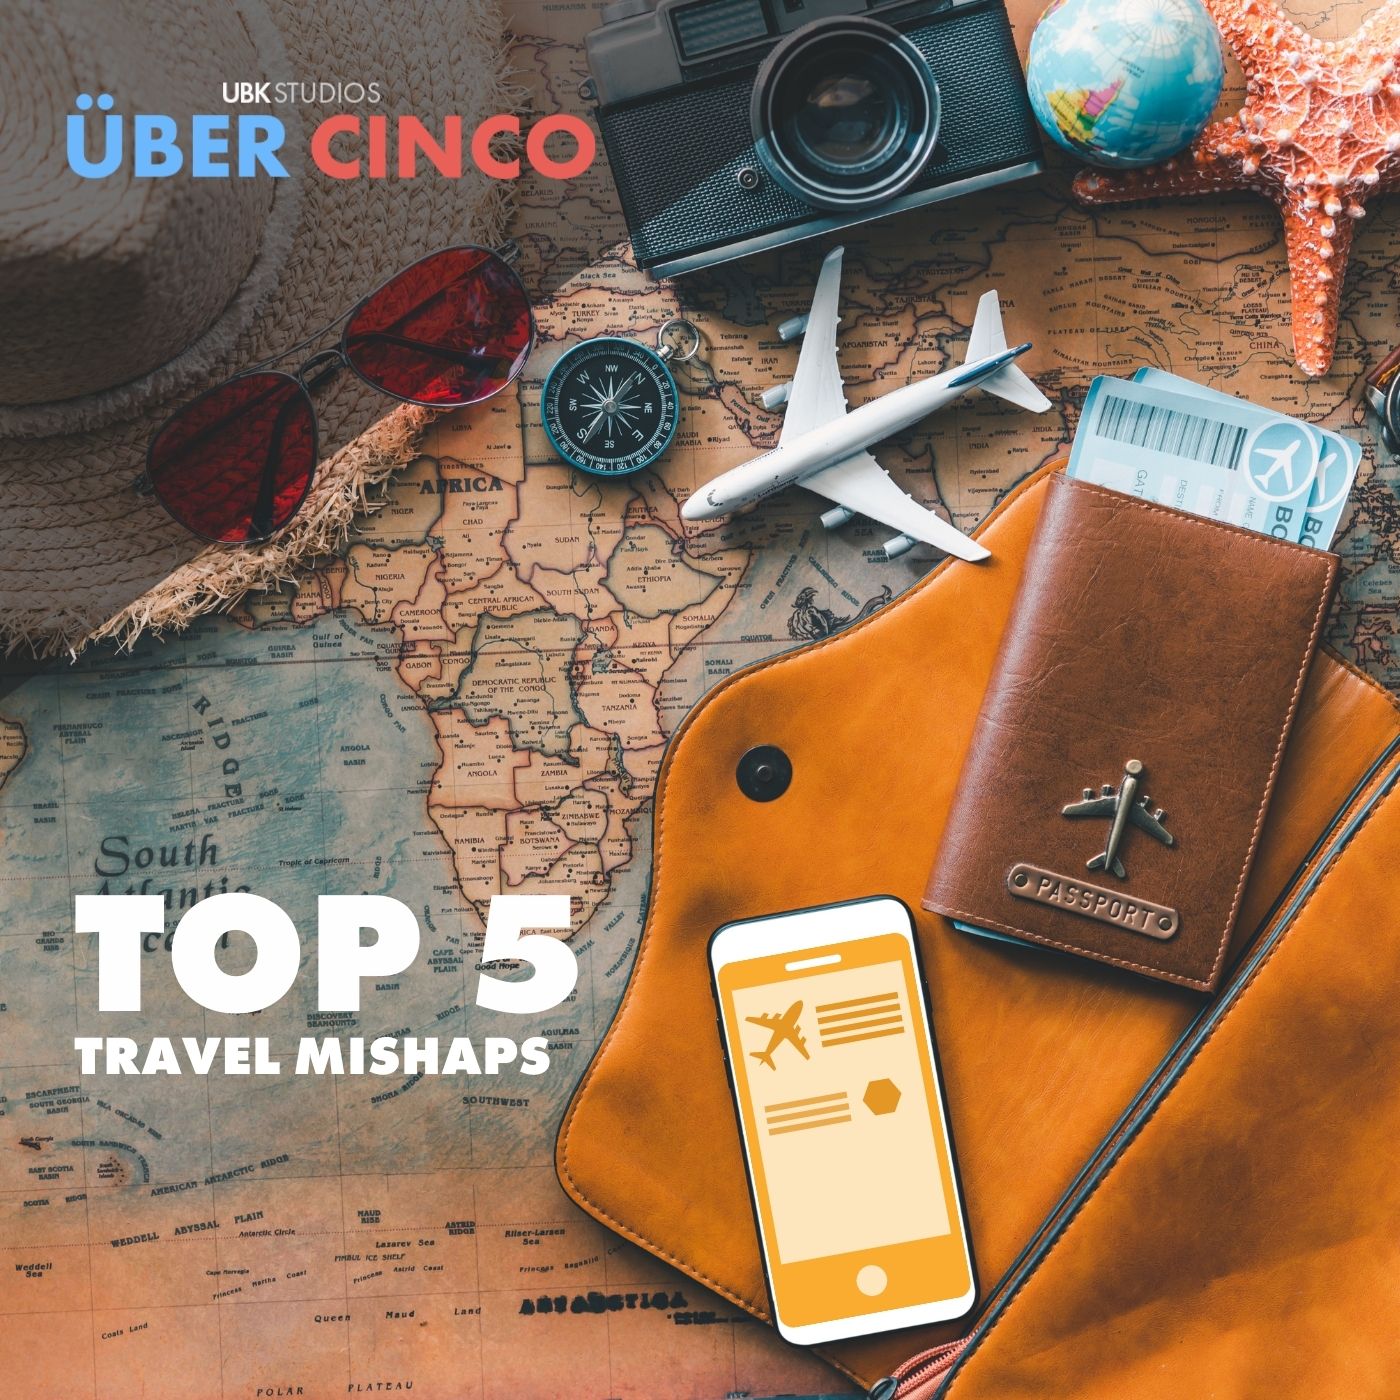 Top 5 Travel Mishaps Image